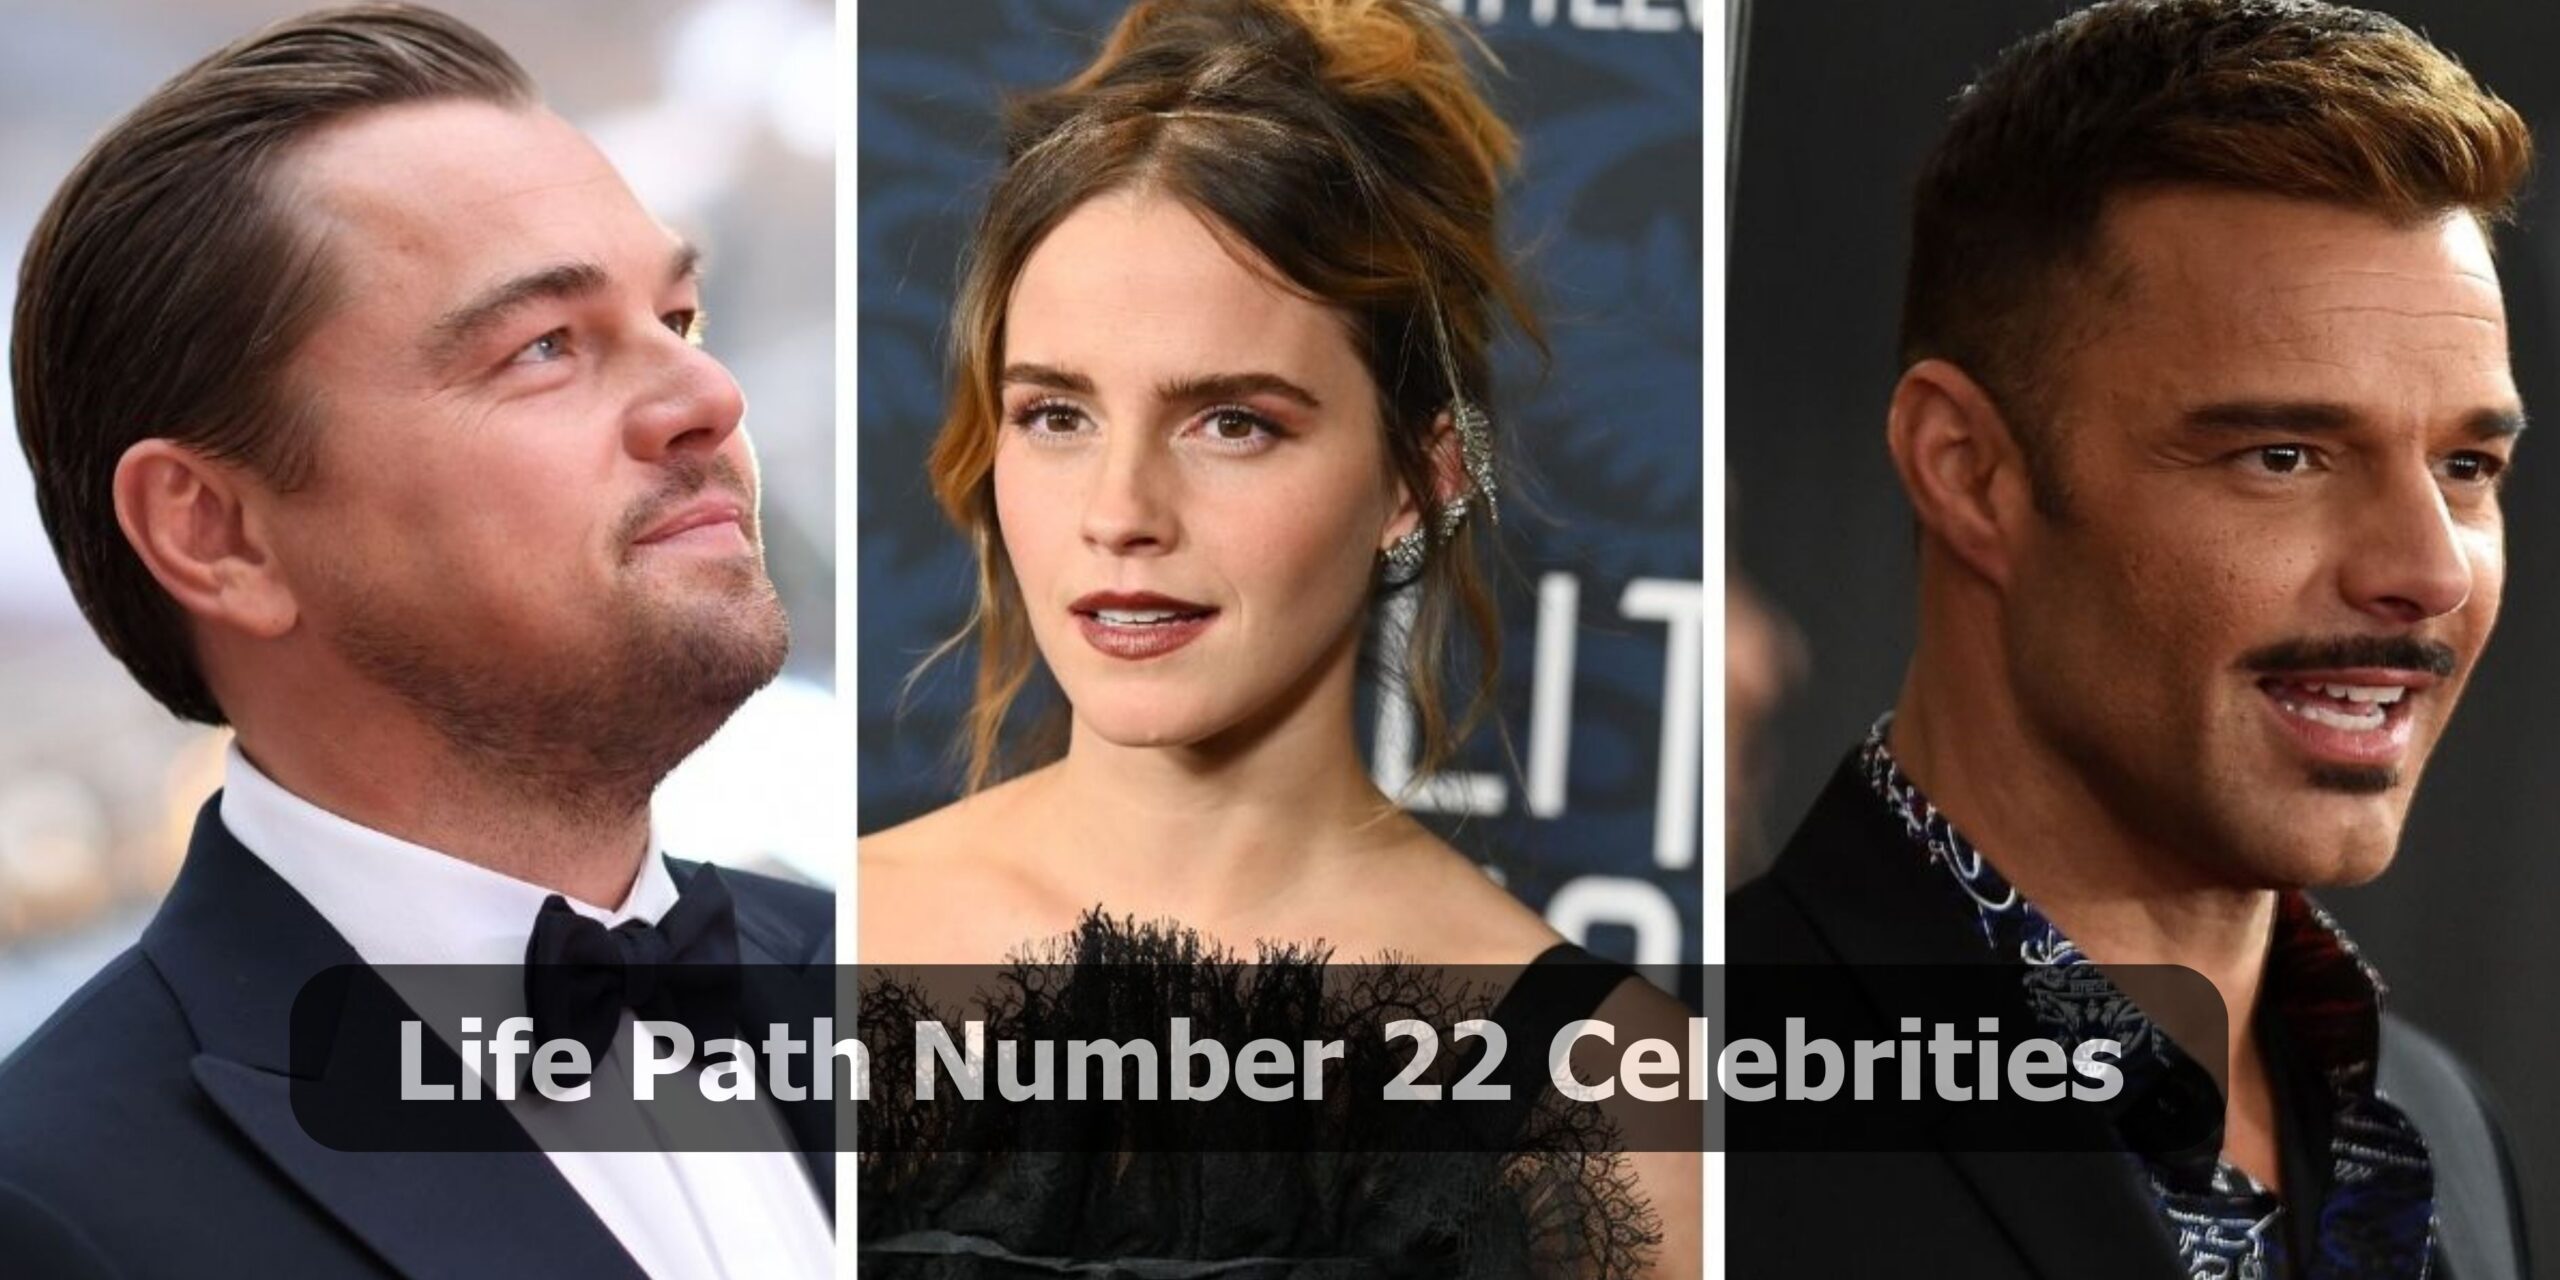 Life Path Number 22 Celebrities